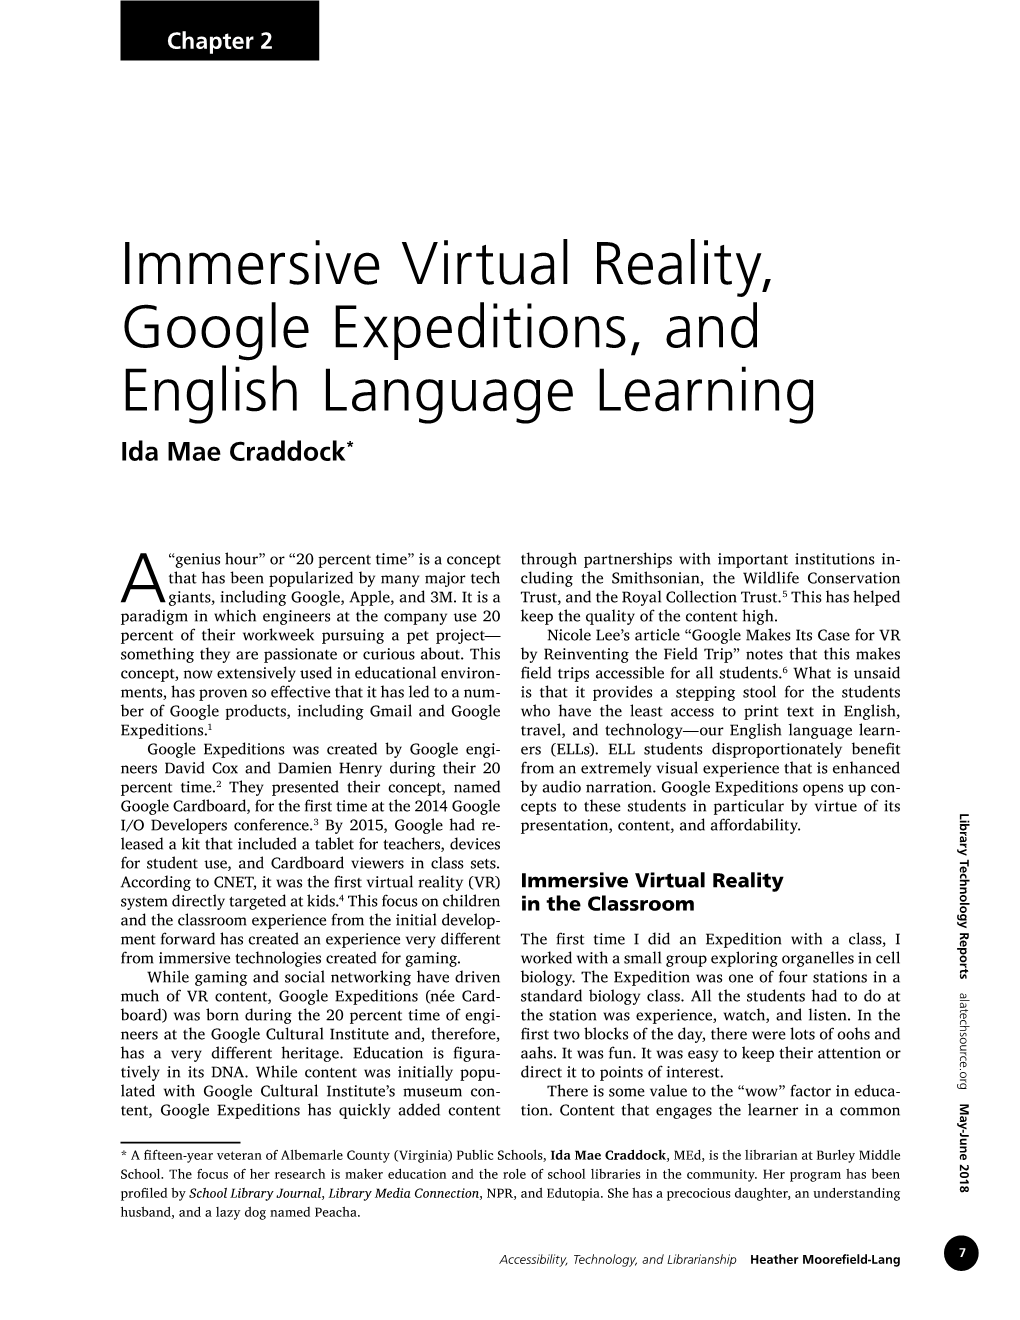 Immersive Virtual Reality, Google Expeditions, and English Language Learning Ida Mae Craddock*